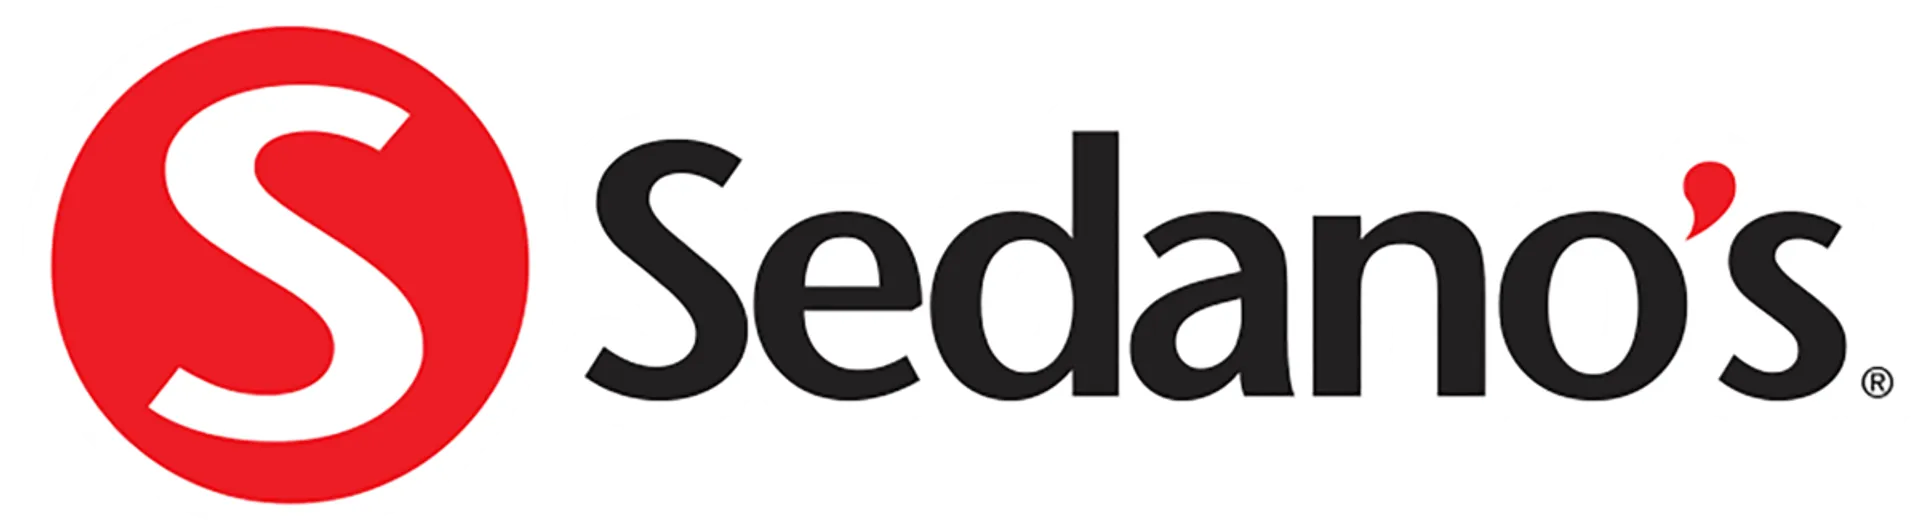 SEDANO'S logo current weekly ad